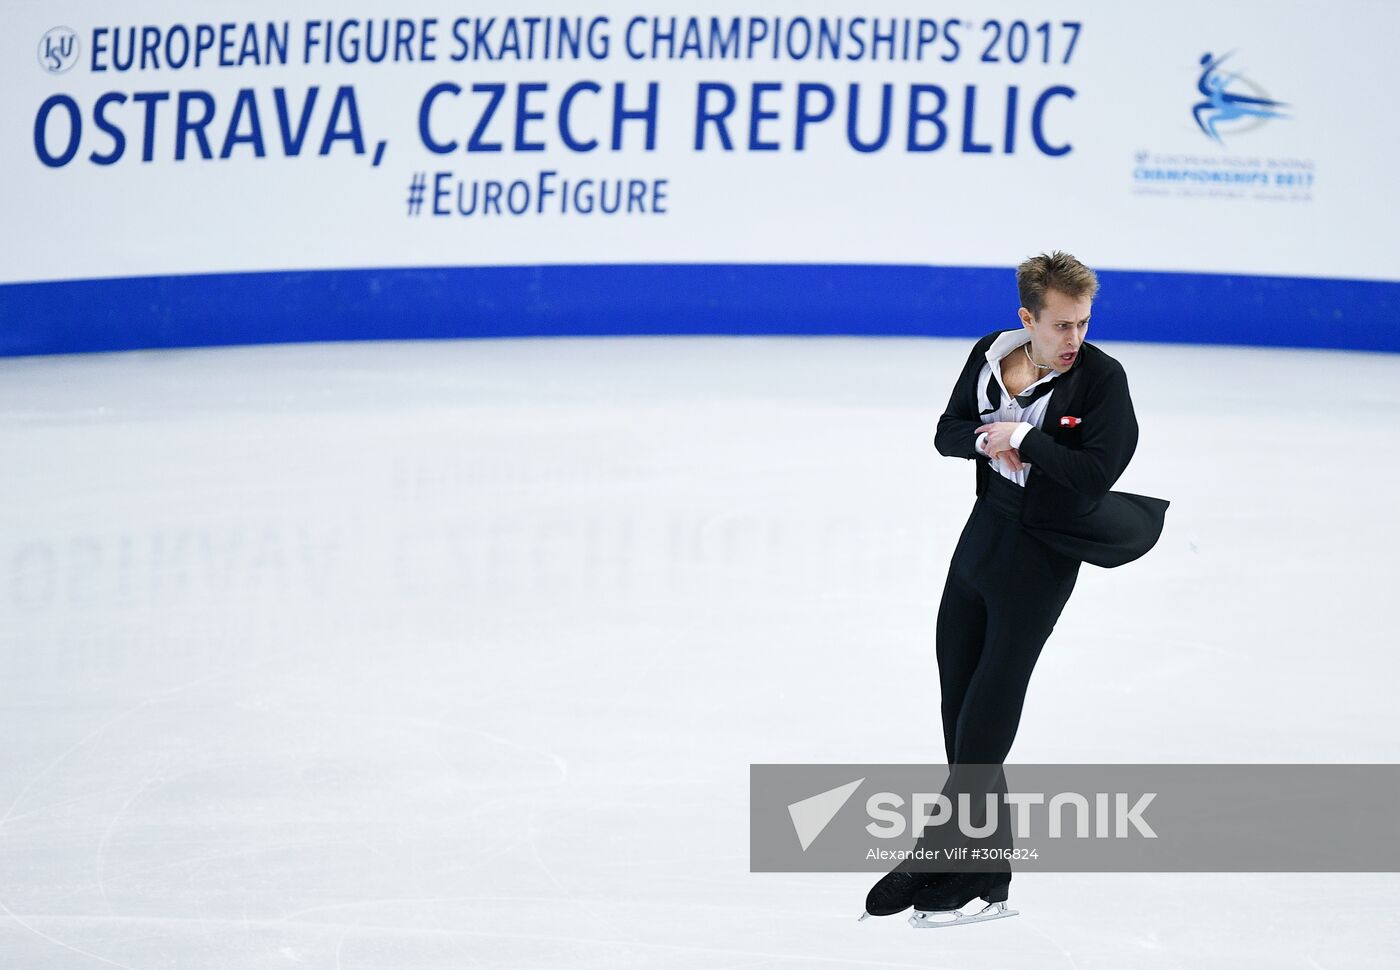 European Figure Skating Championship. Men's short program